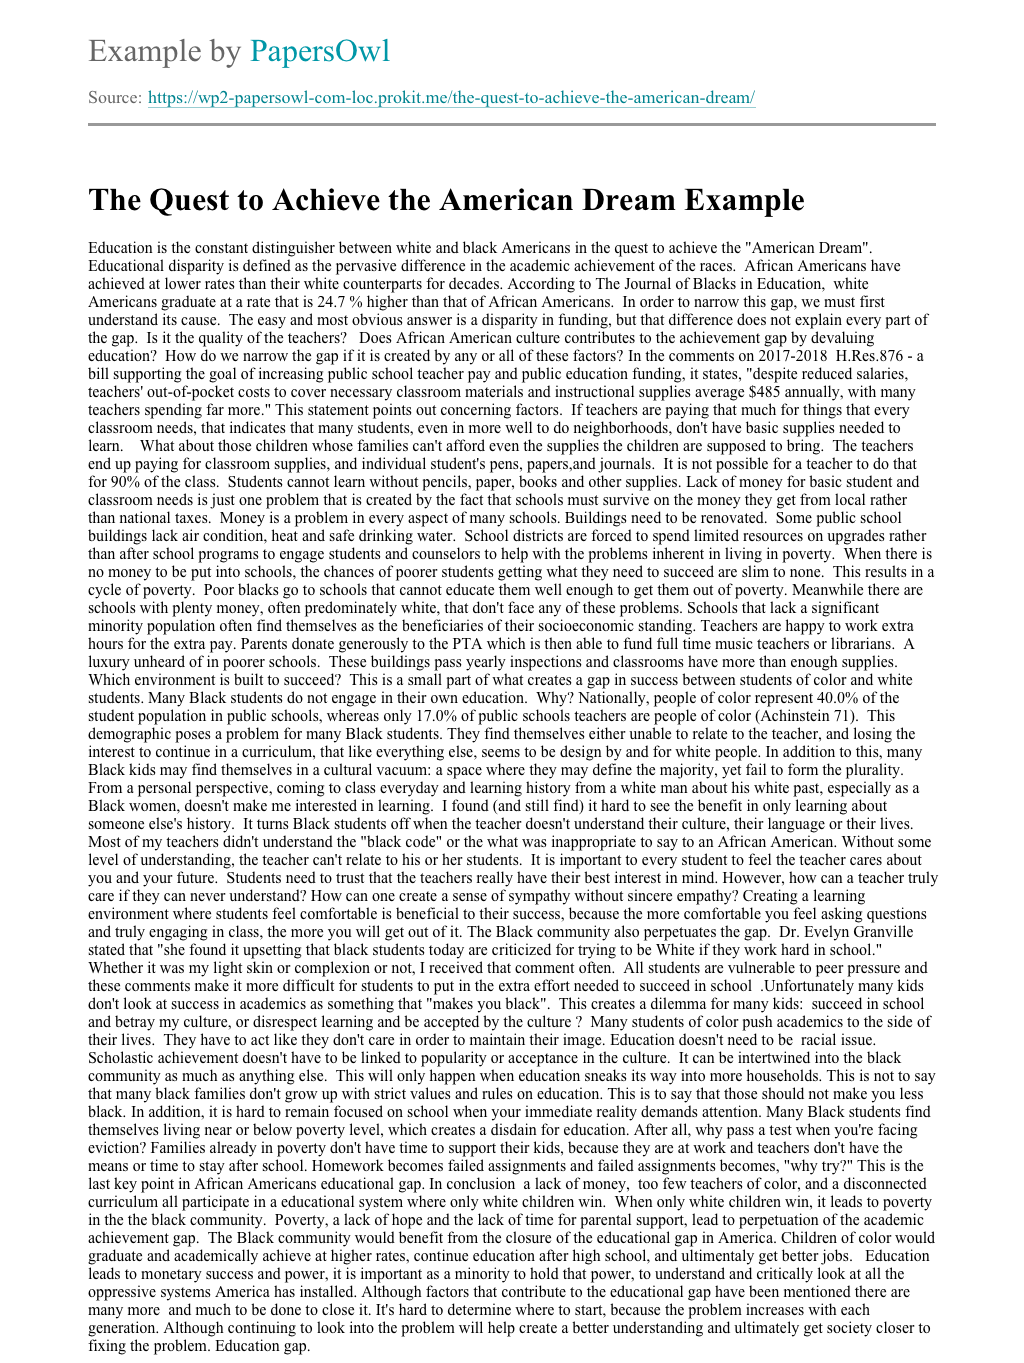 american dream informative essay